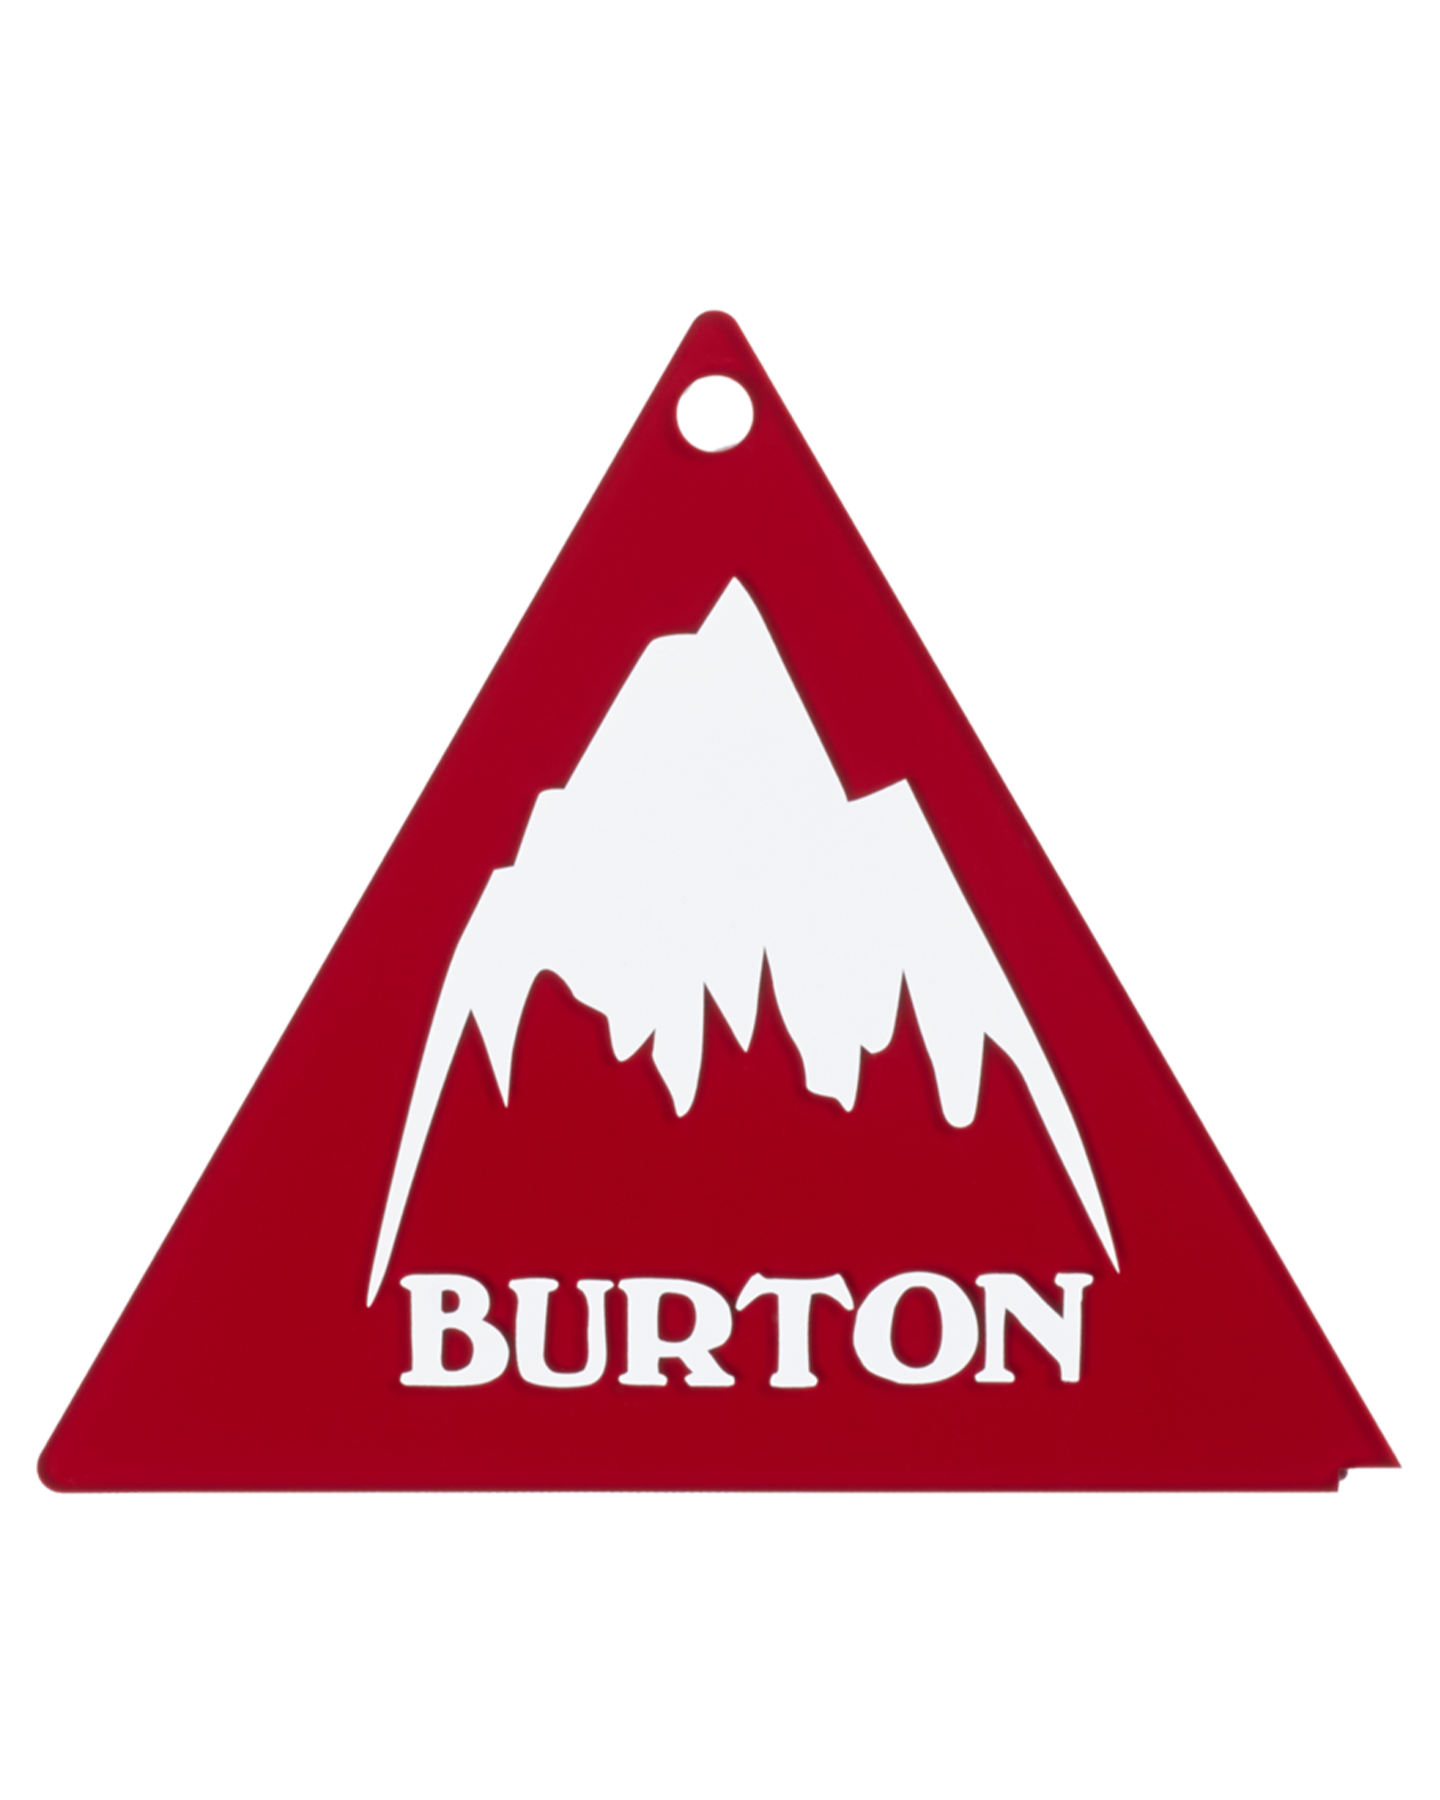 Burton Tri-Scraper Snowboard Tools - SnowSkiersWarehouse